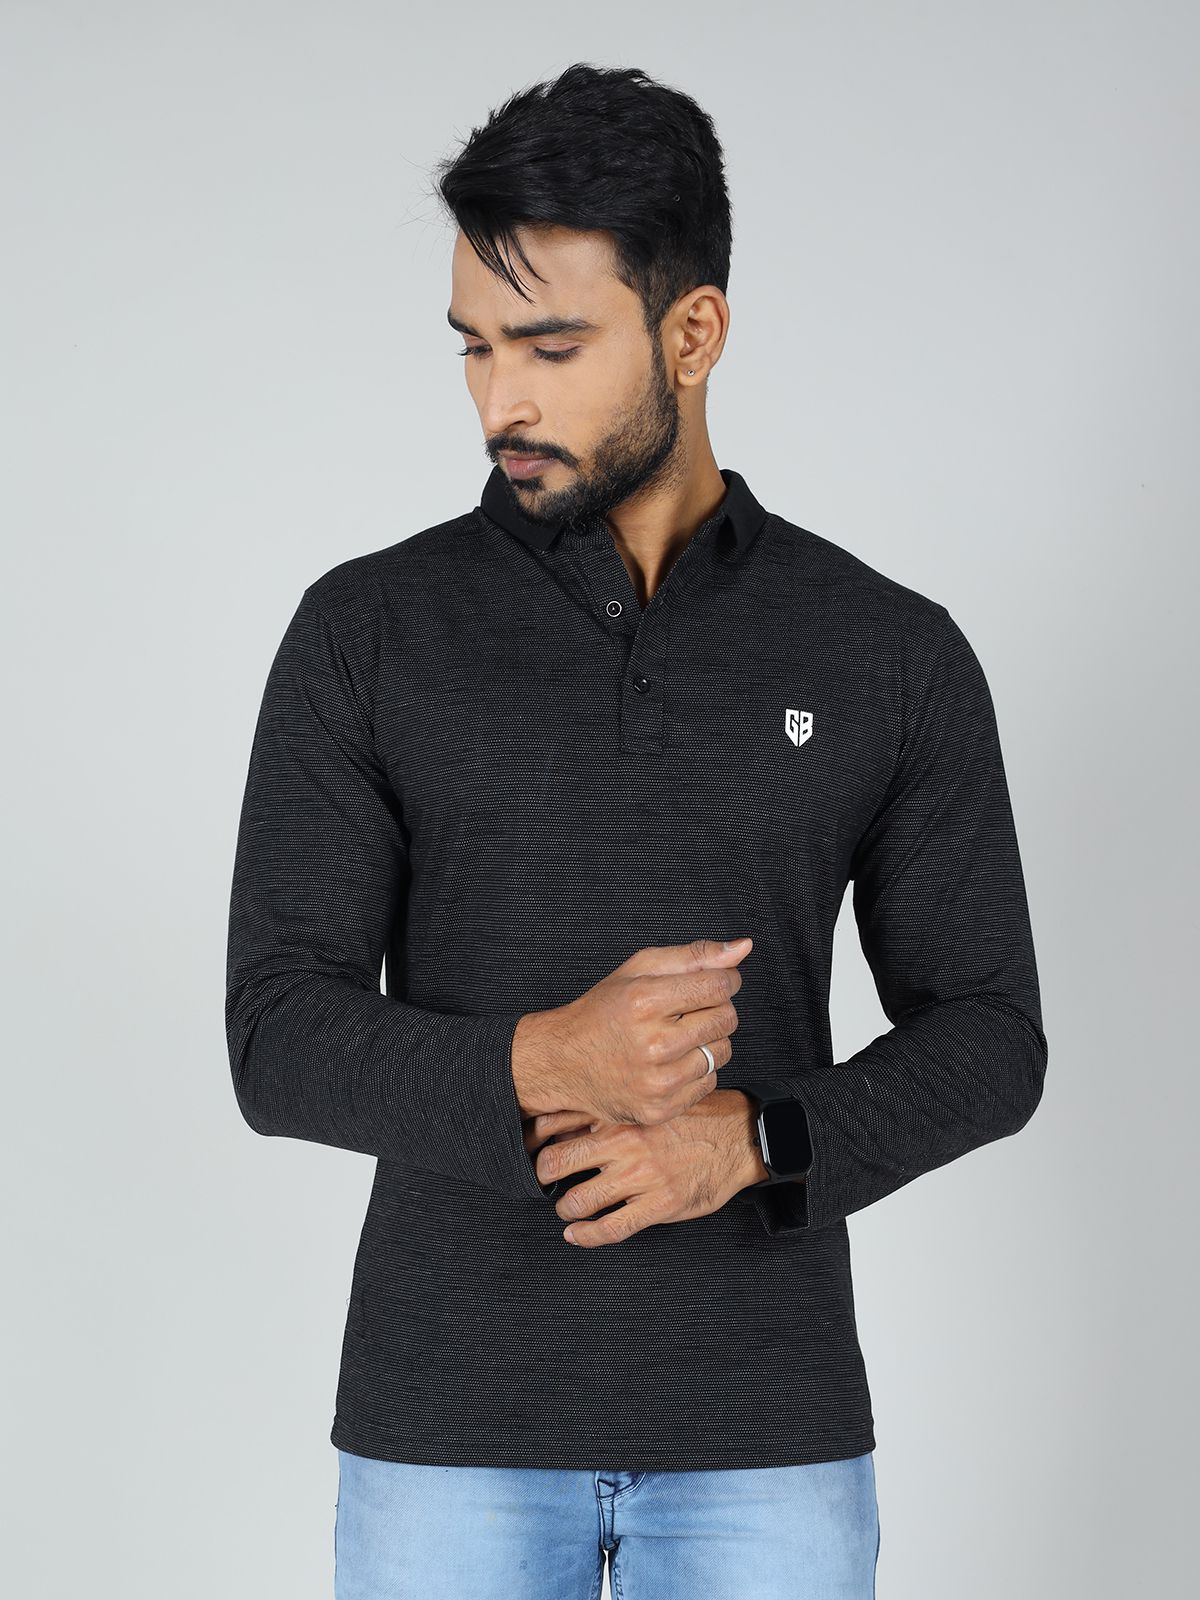     			GAME BEGINS Cotton Slim Fit Self Design Full sleeves Men's Polo T Shirt - Black ( Pack of 1 )